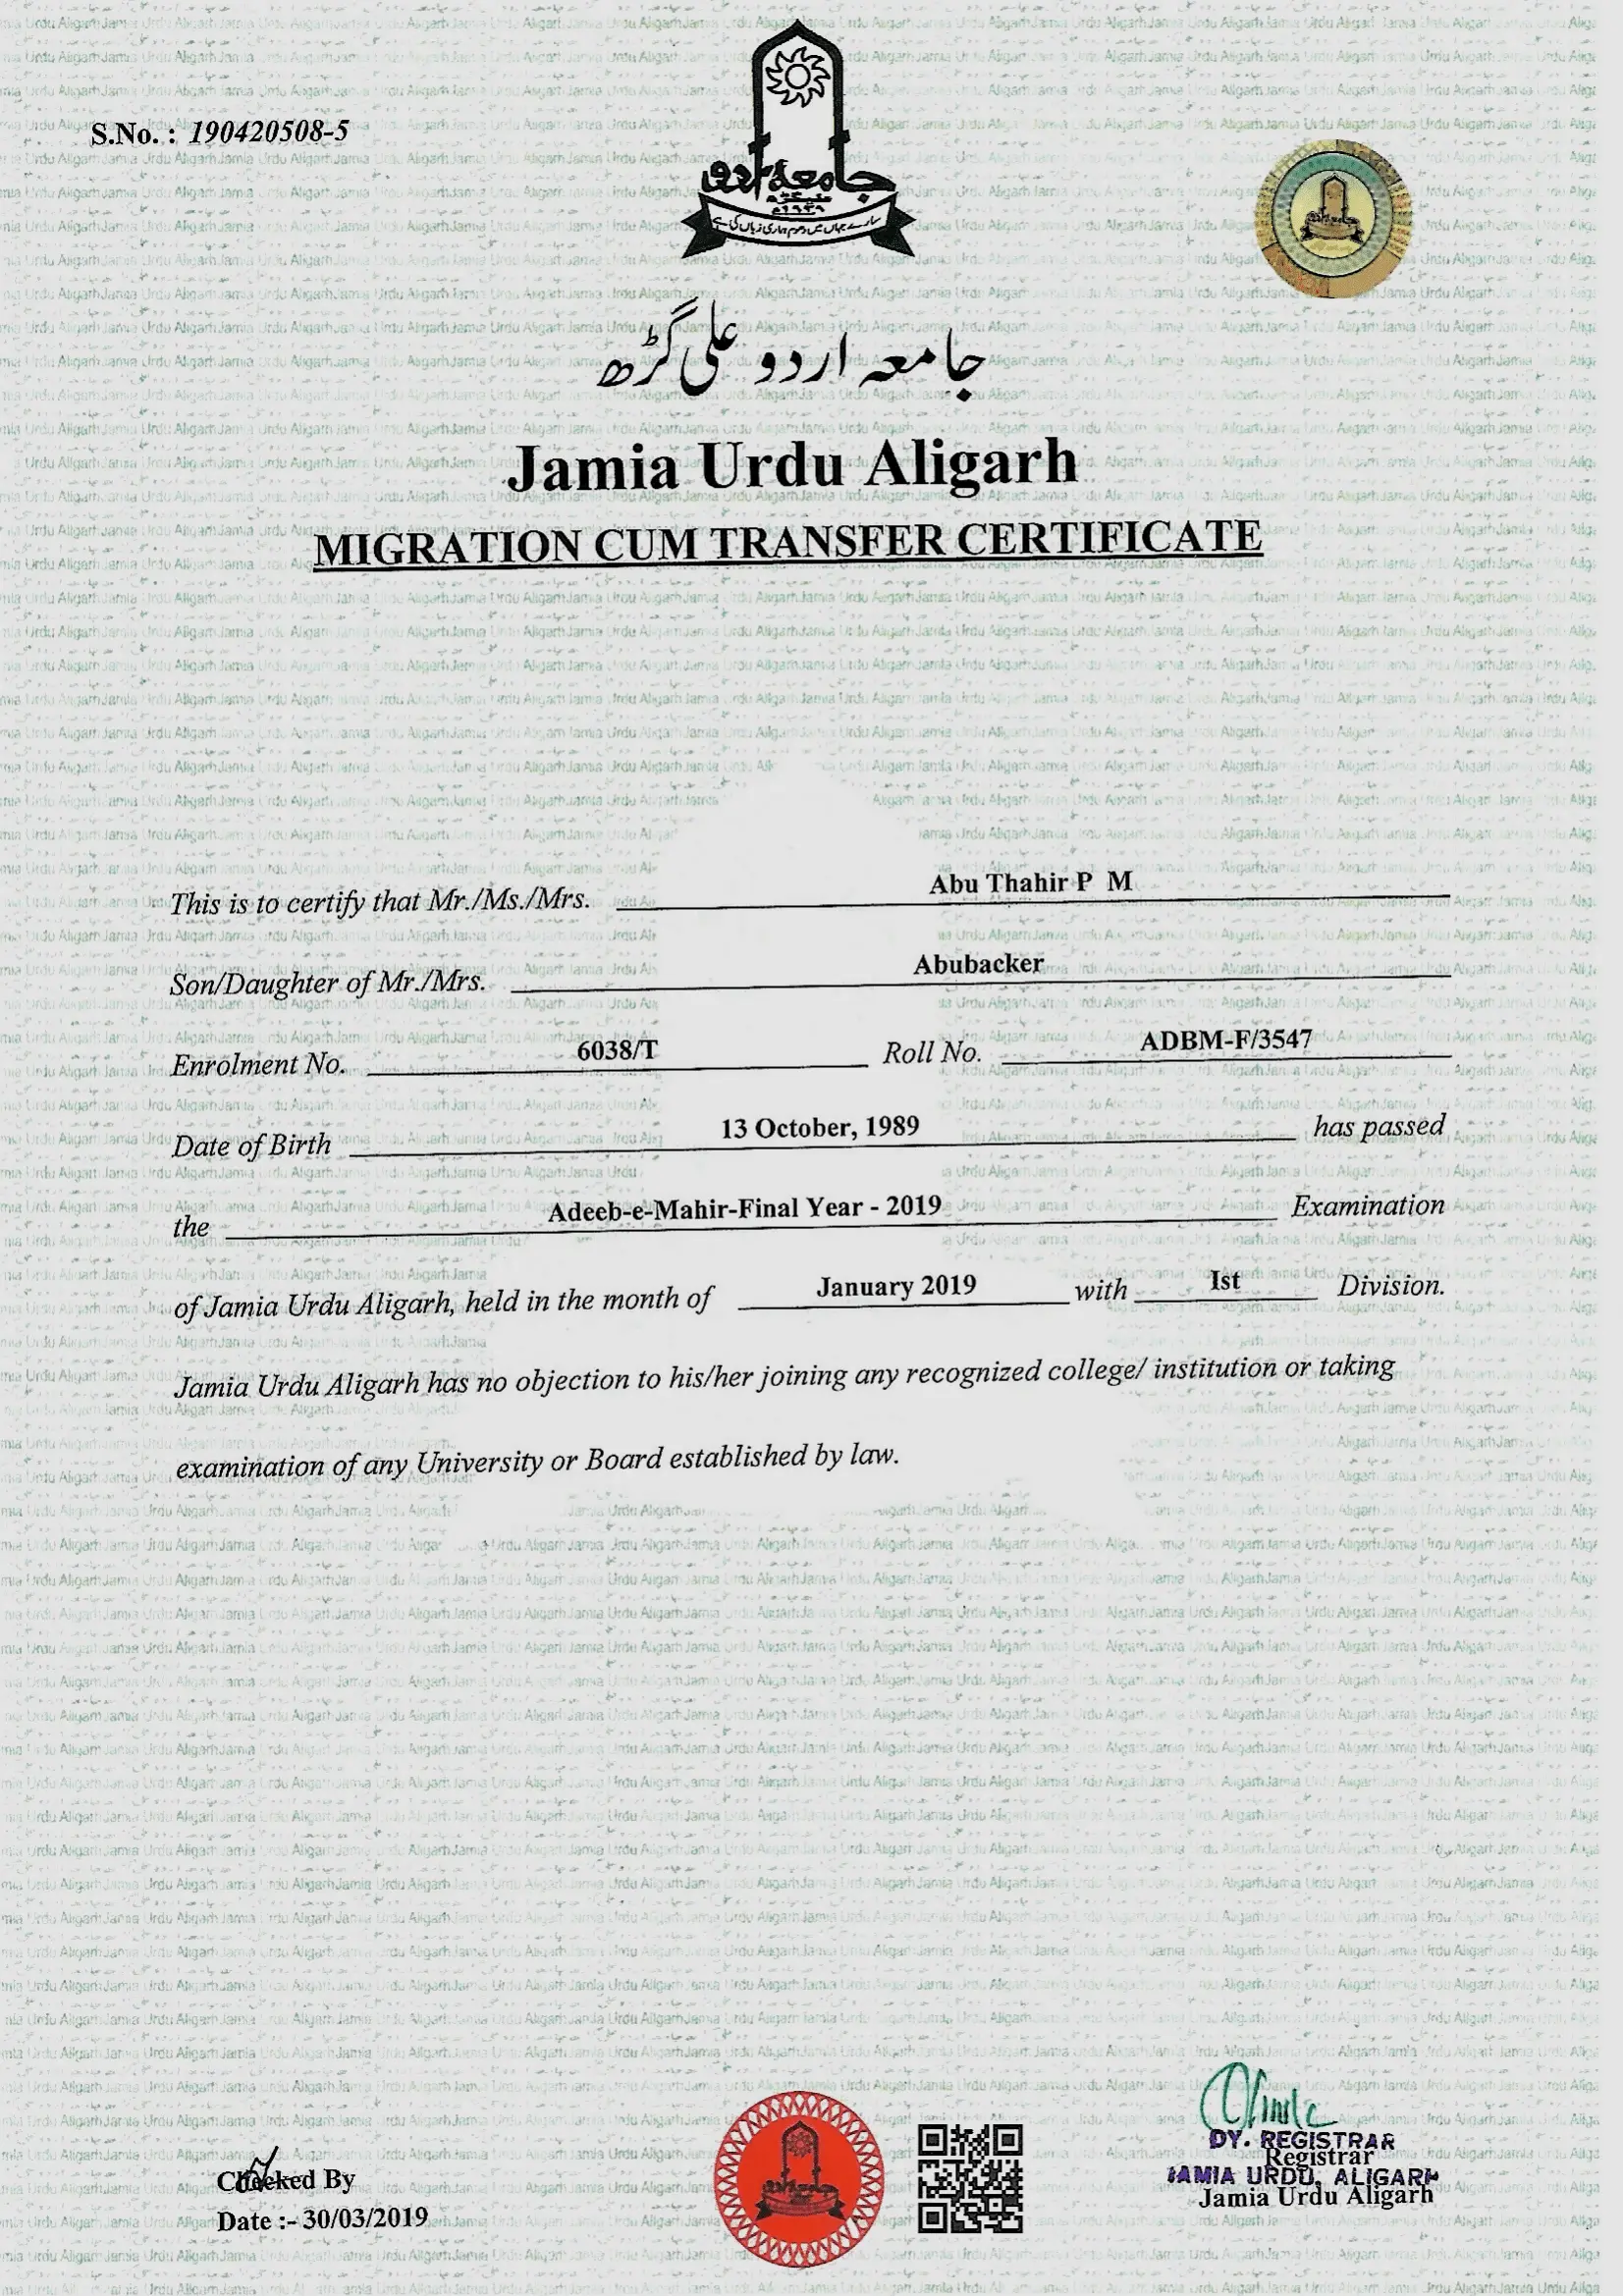 Migration Certificate